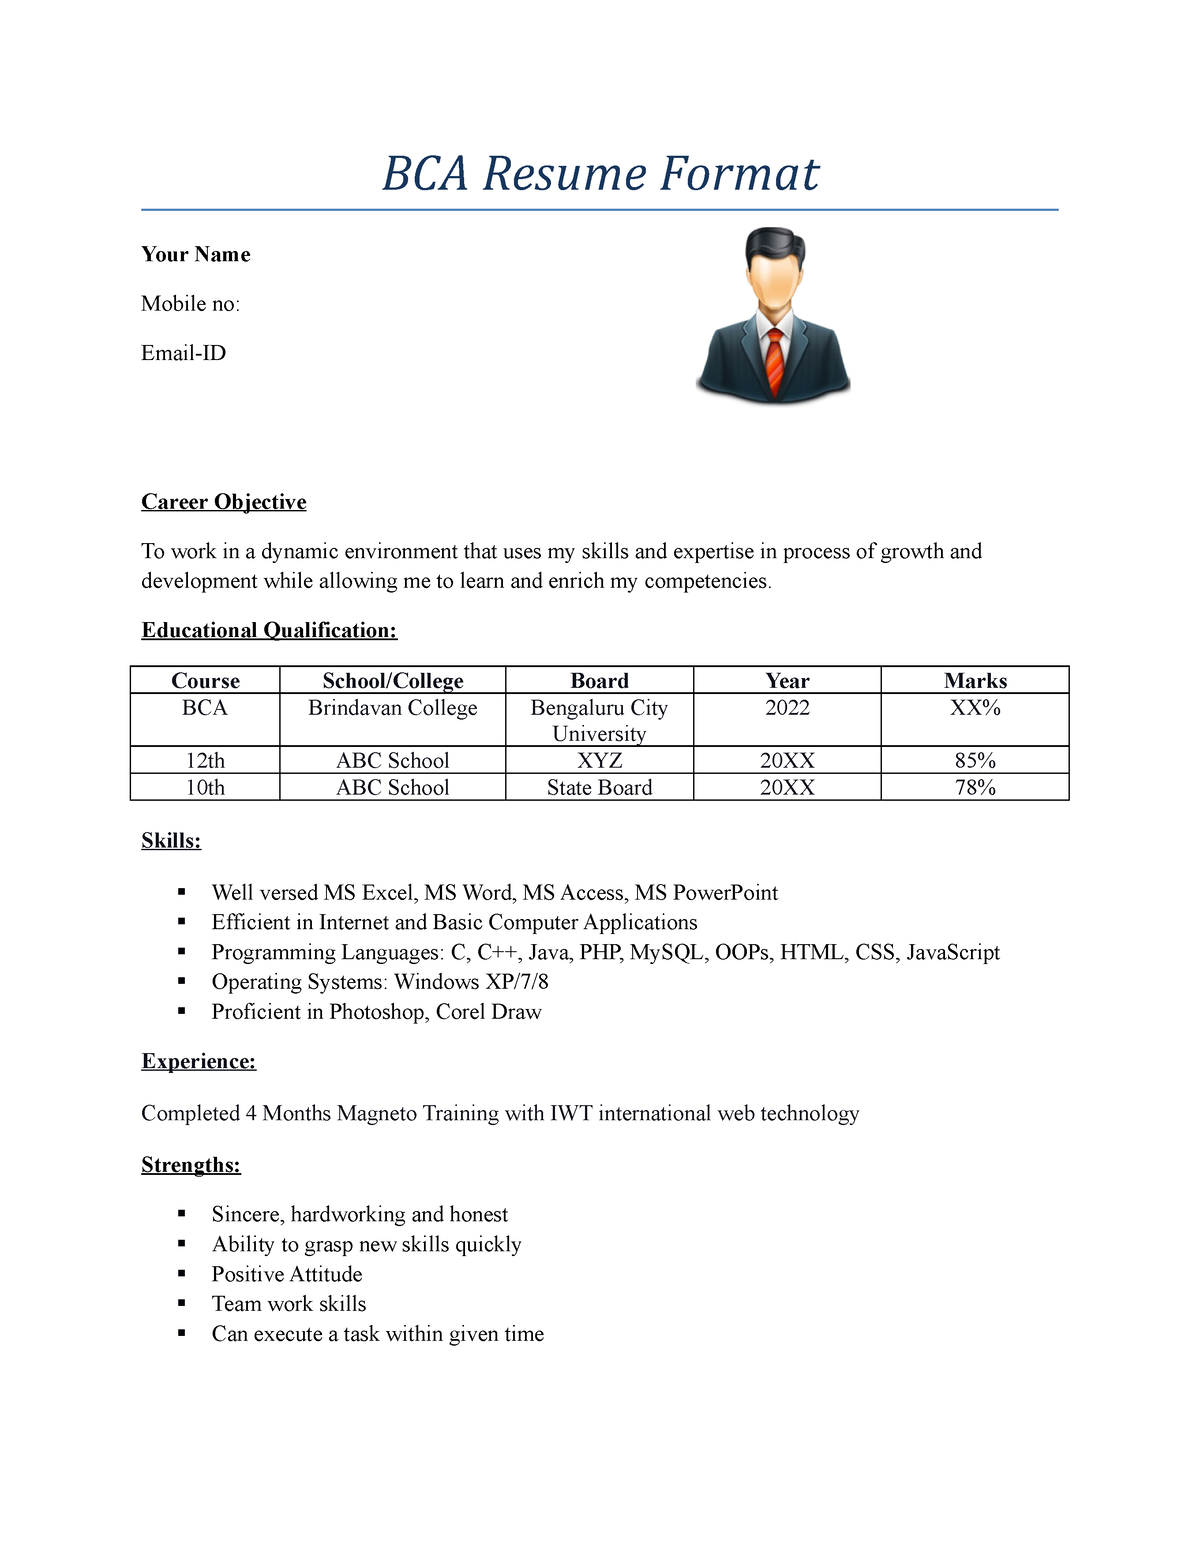 bca student resume format